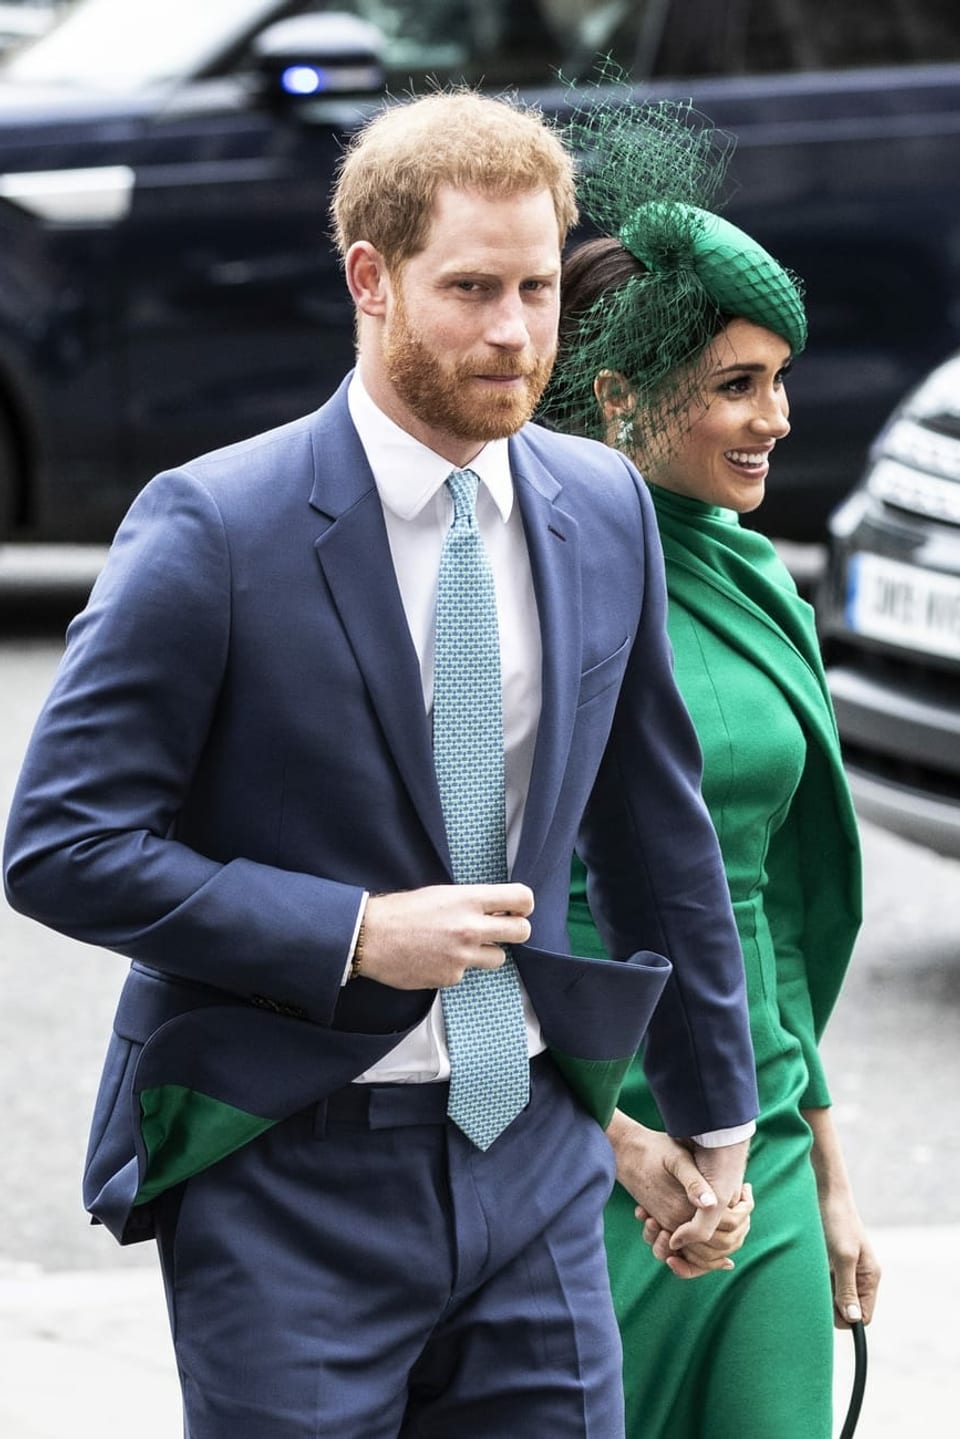 Mann im Anzug und Frau in grünem Kleid.